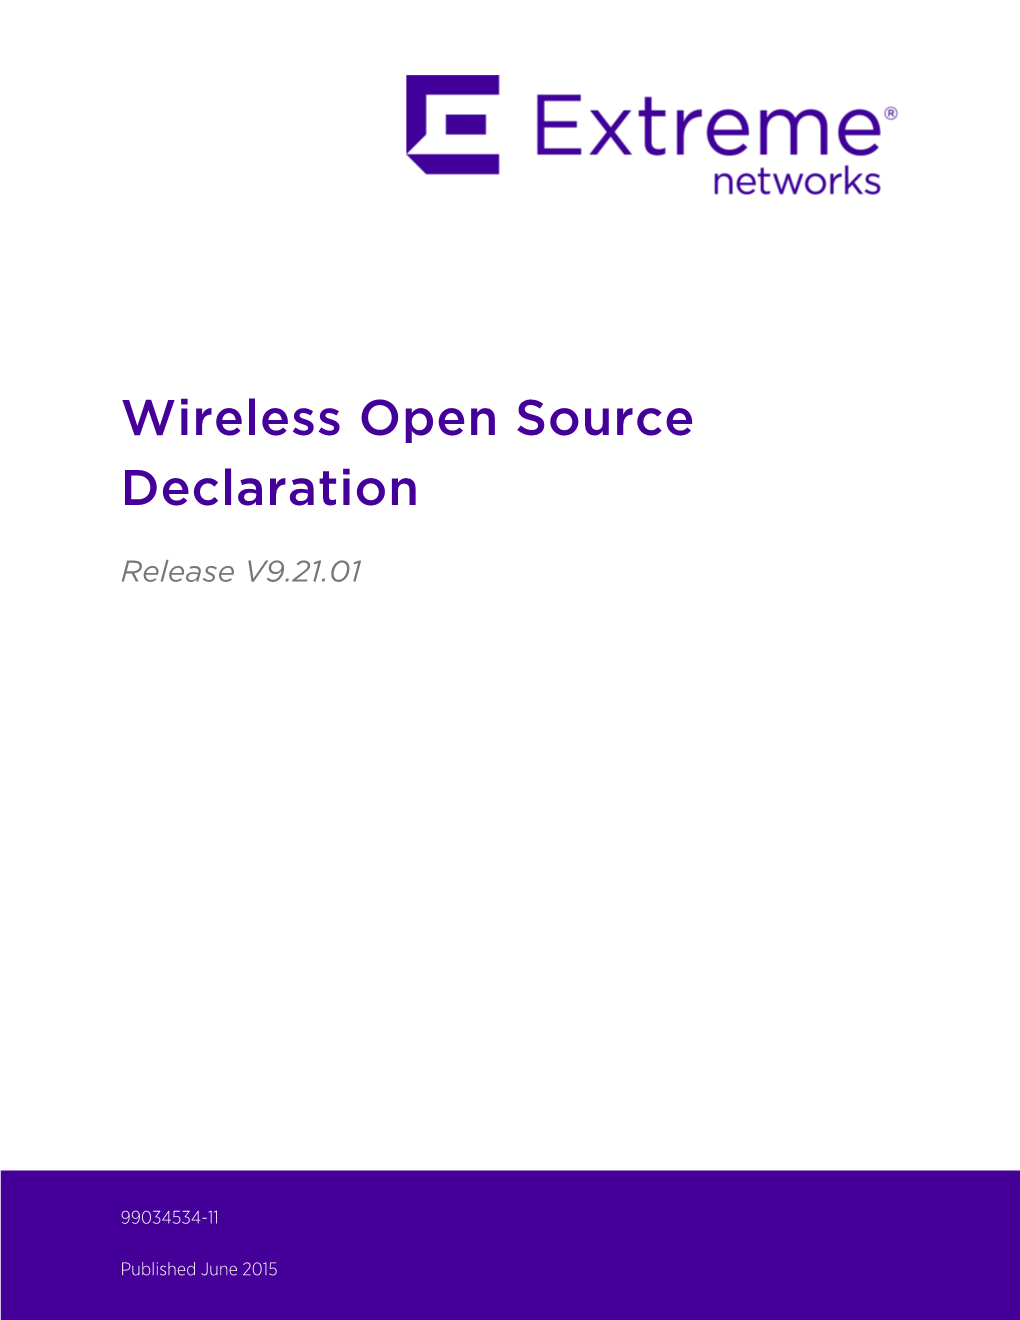 Wireless Open Source Declaration